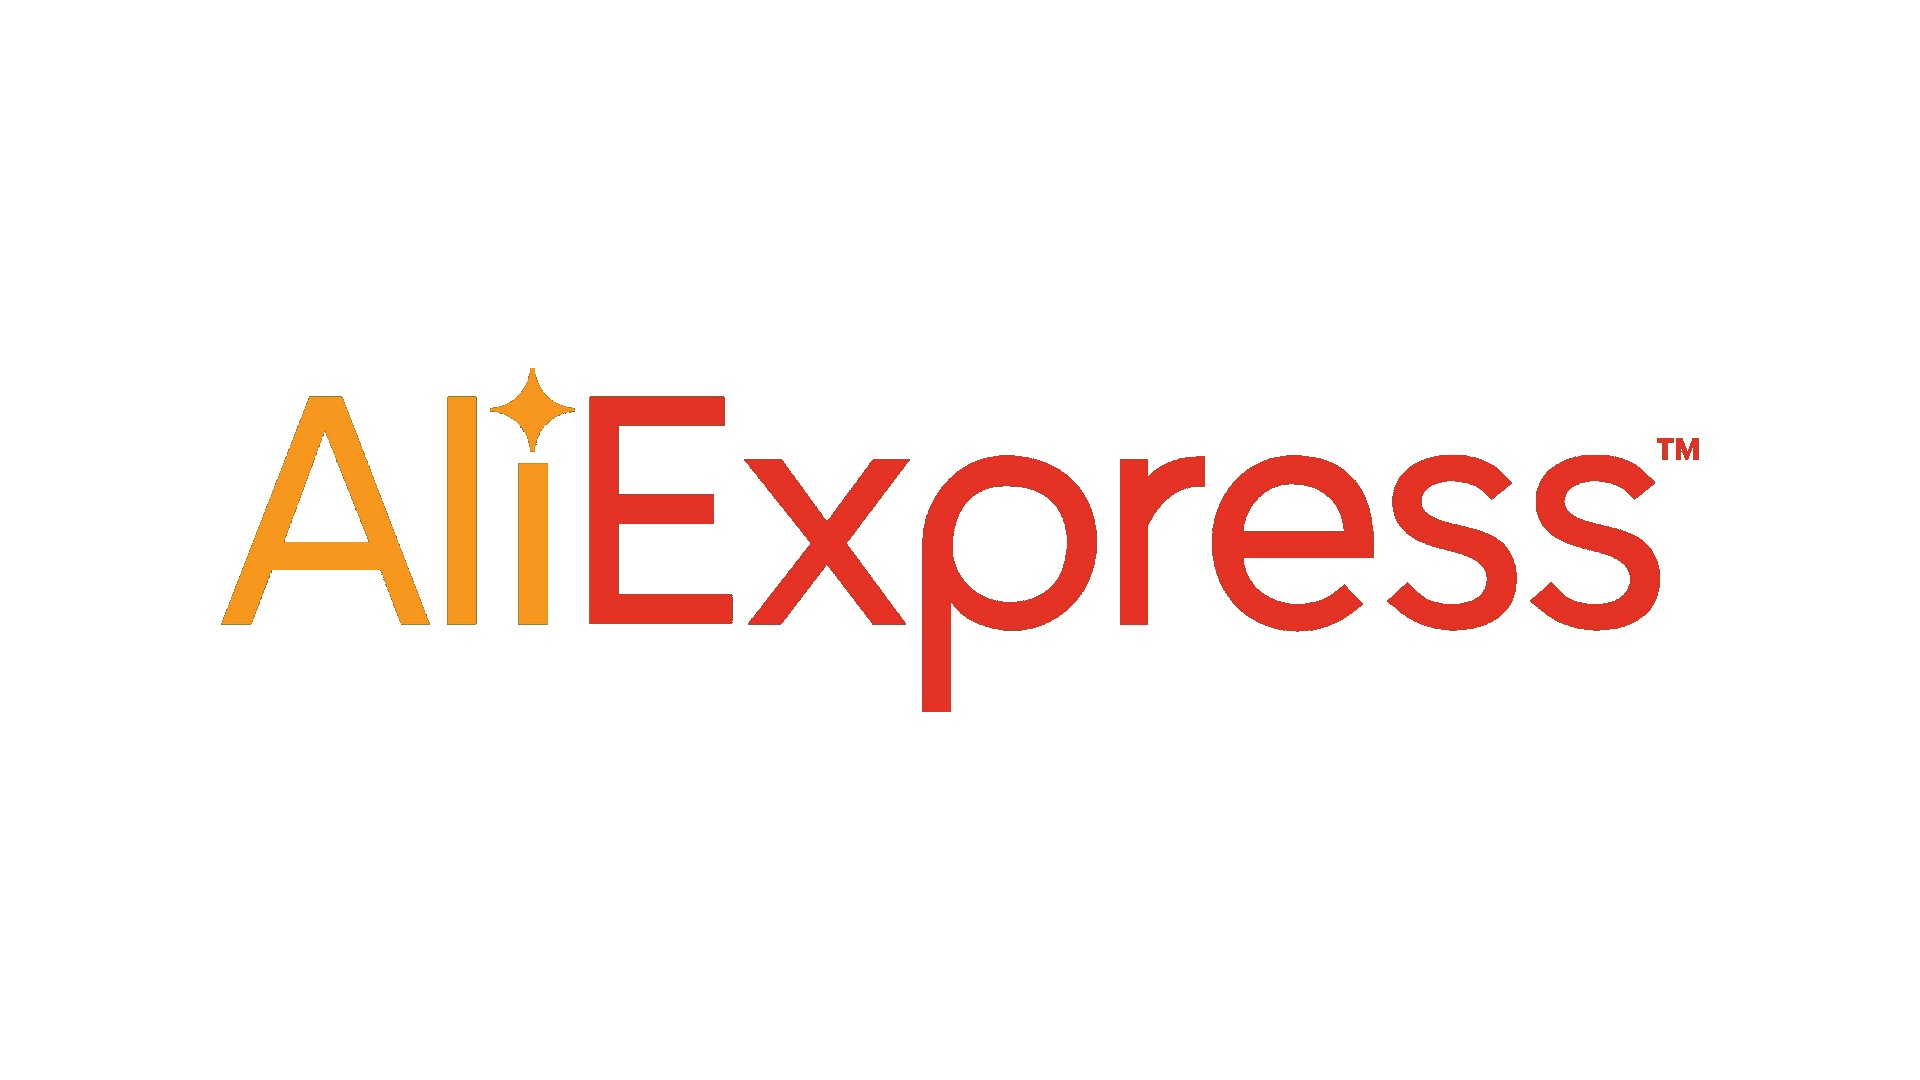 AliExpress (1) Logo (Alibaba)